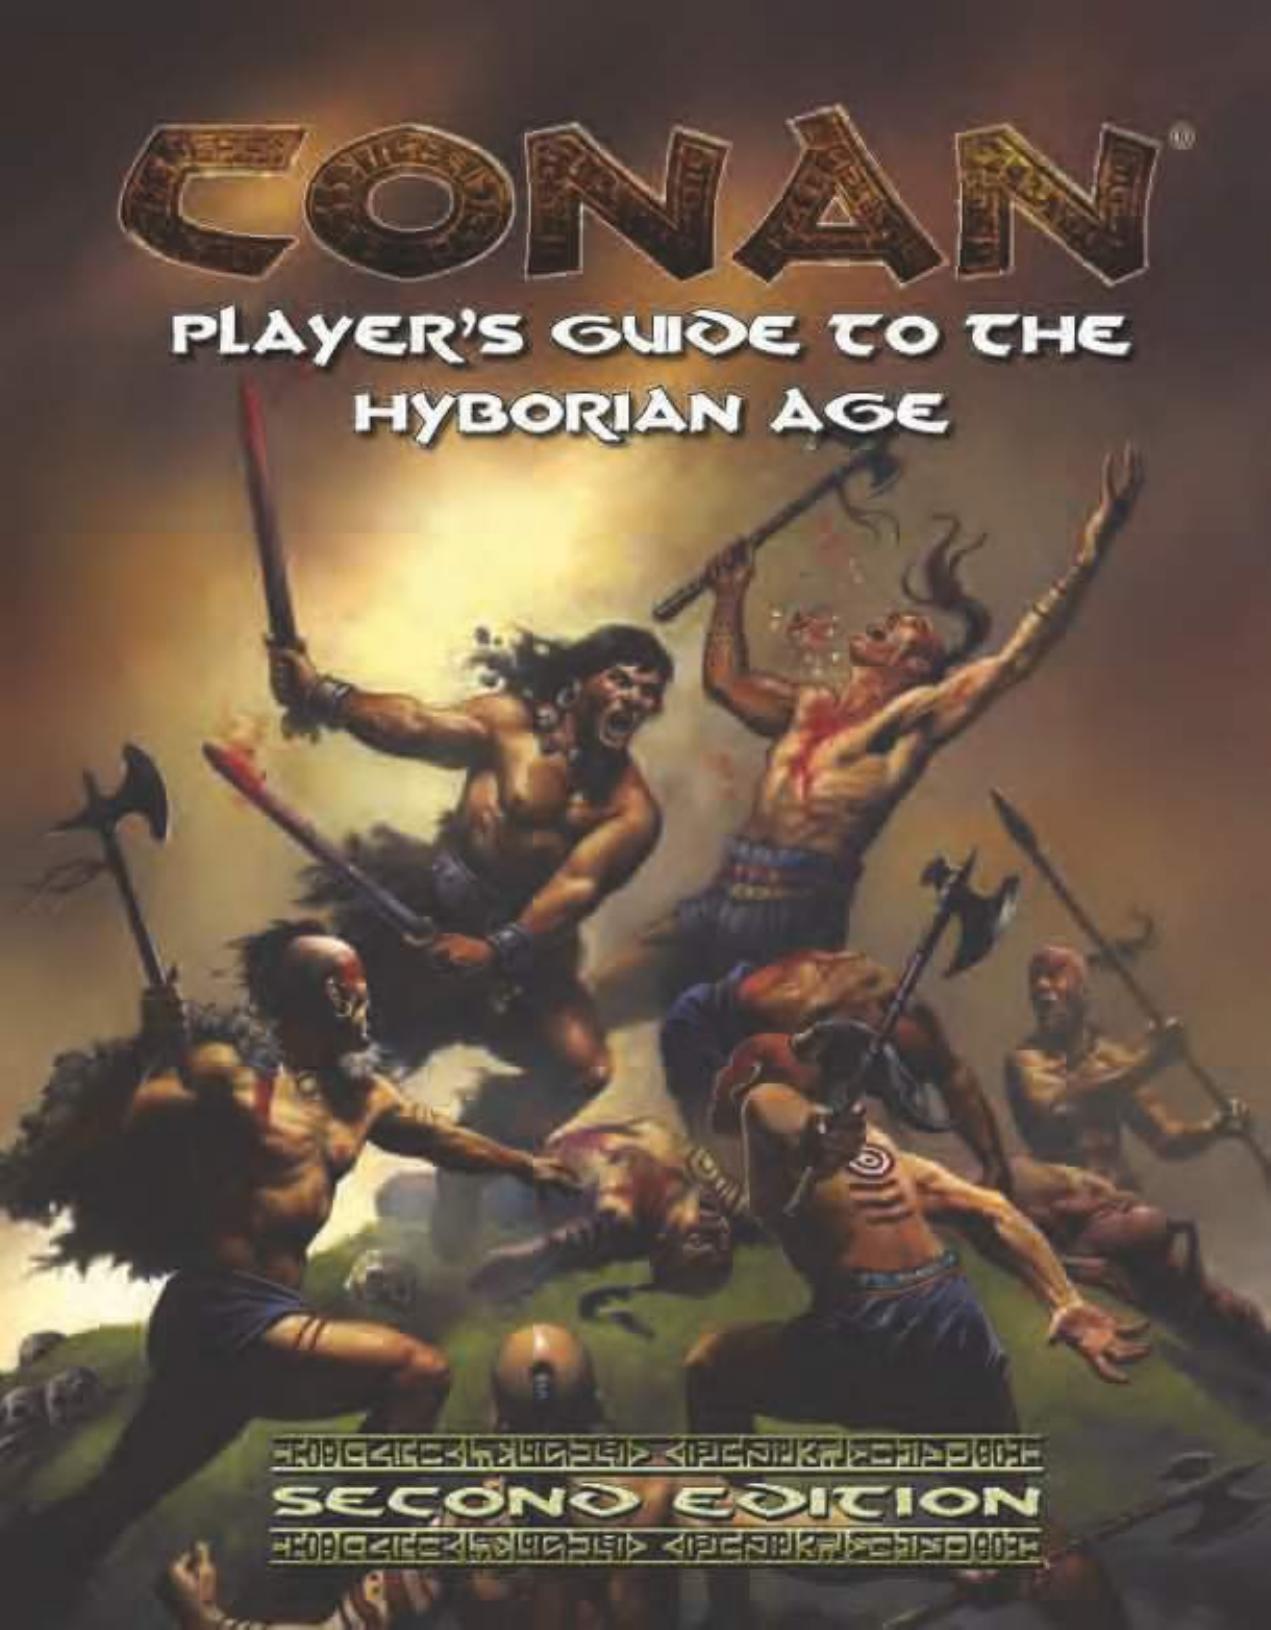 Conan D20 2e Player's Guide To the Hyborian Age